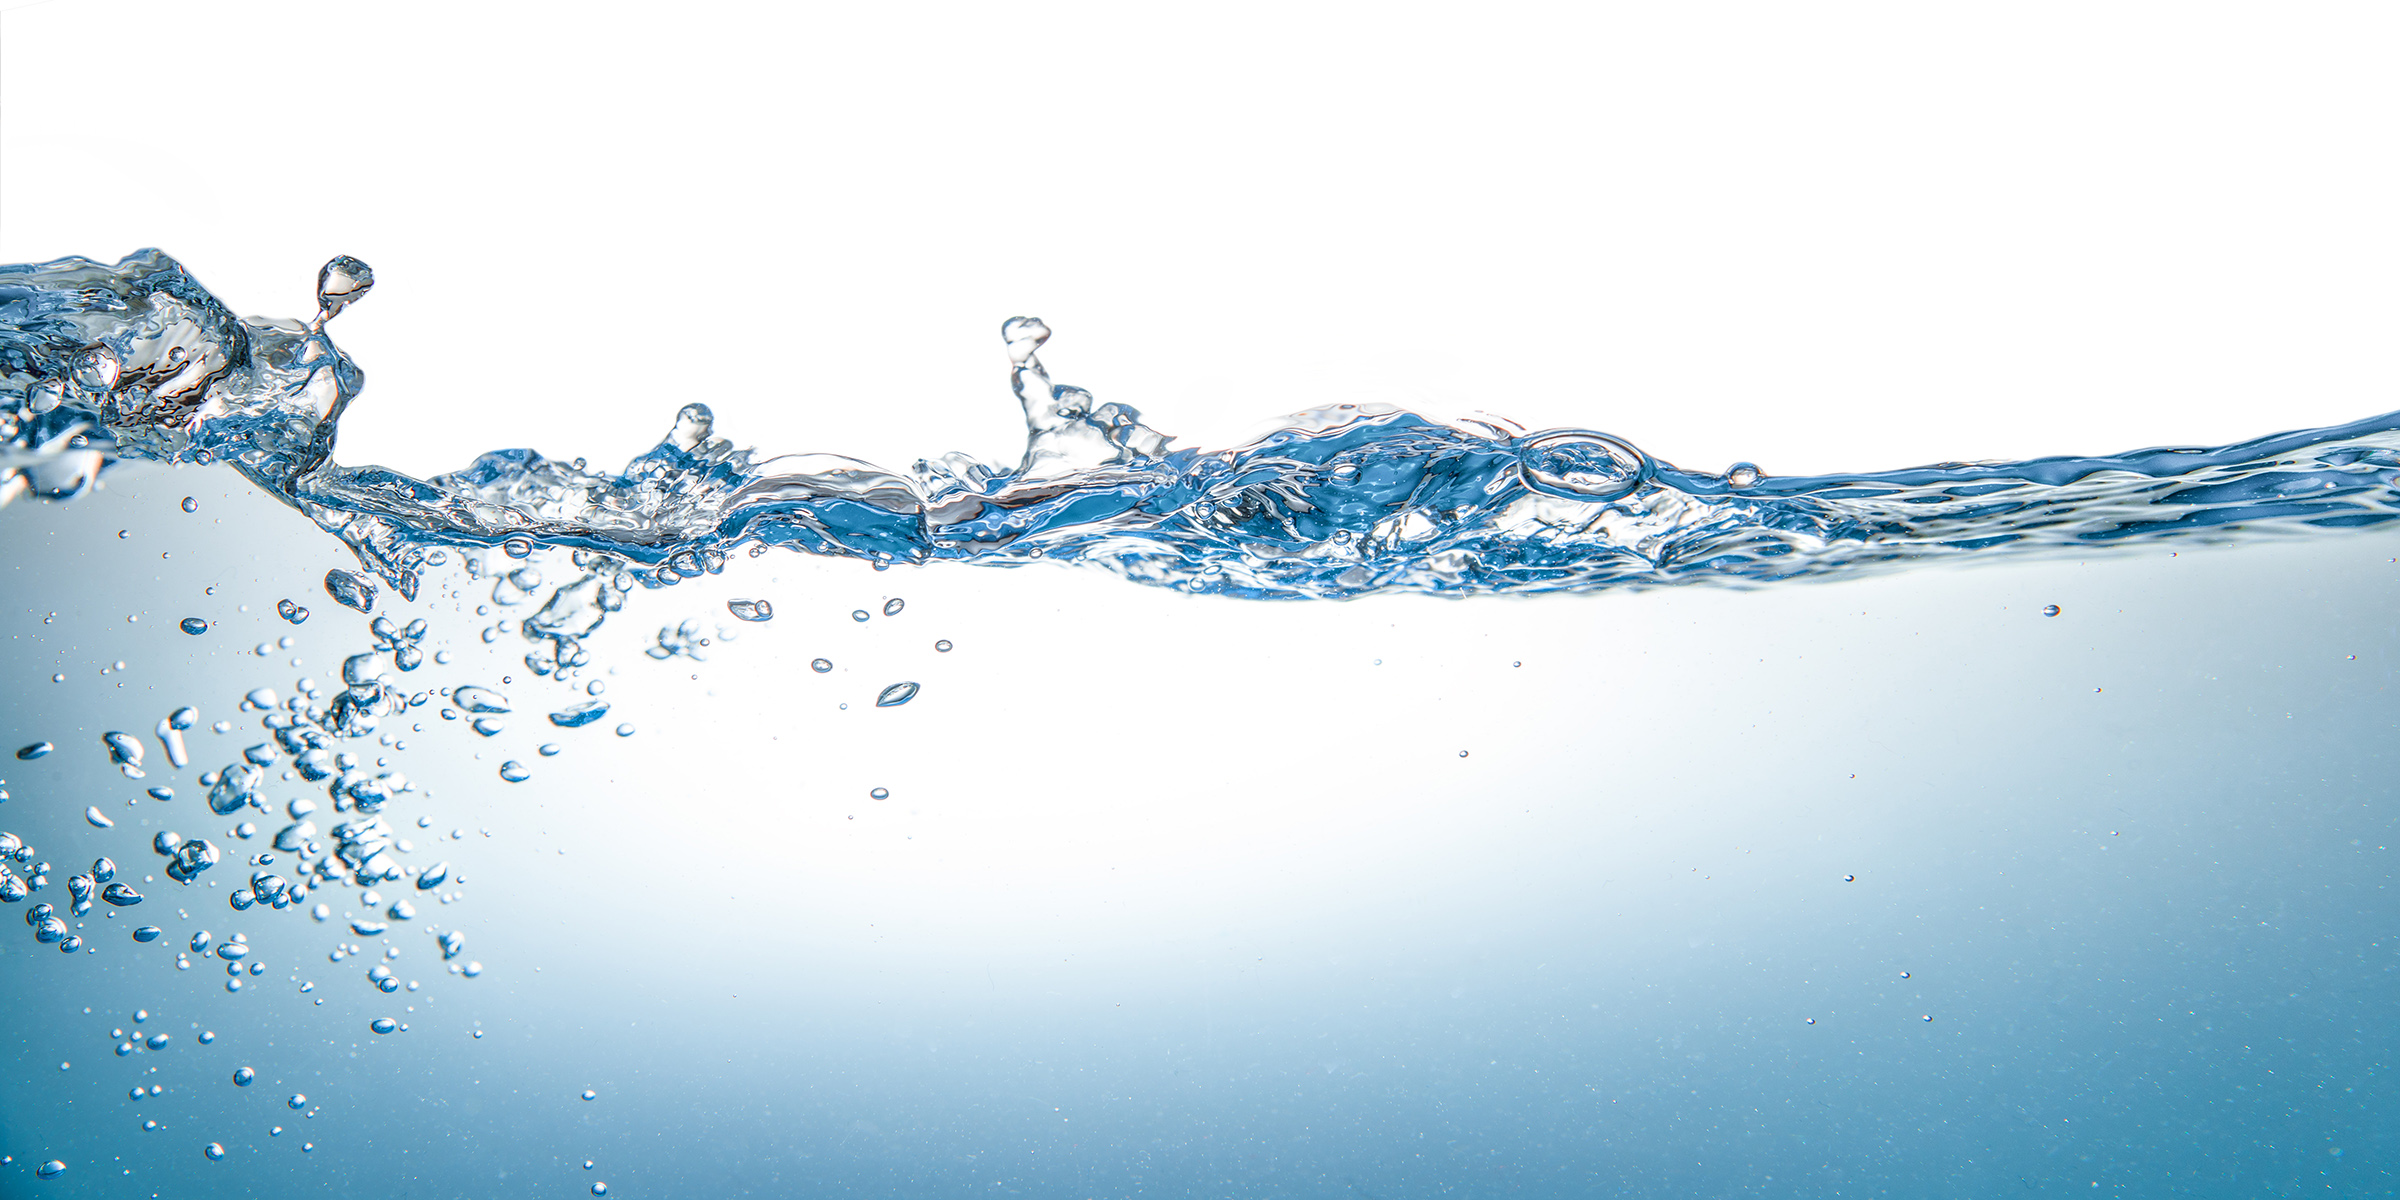 International Water Services Flushability Group